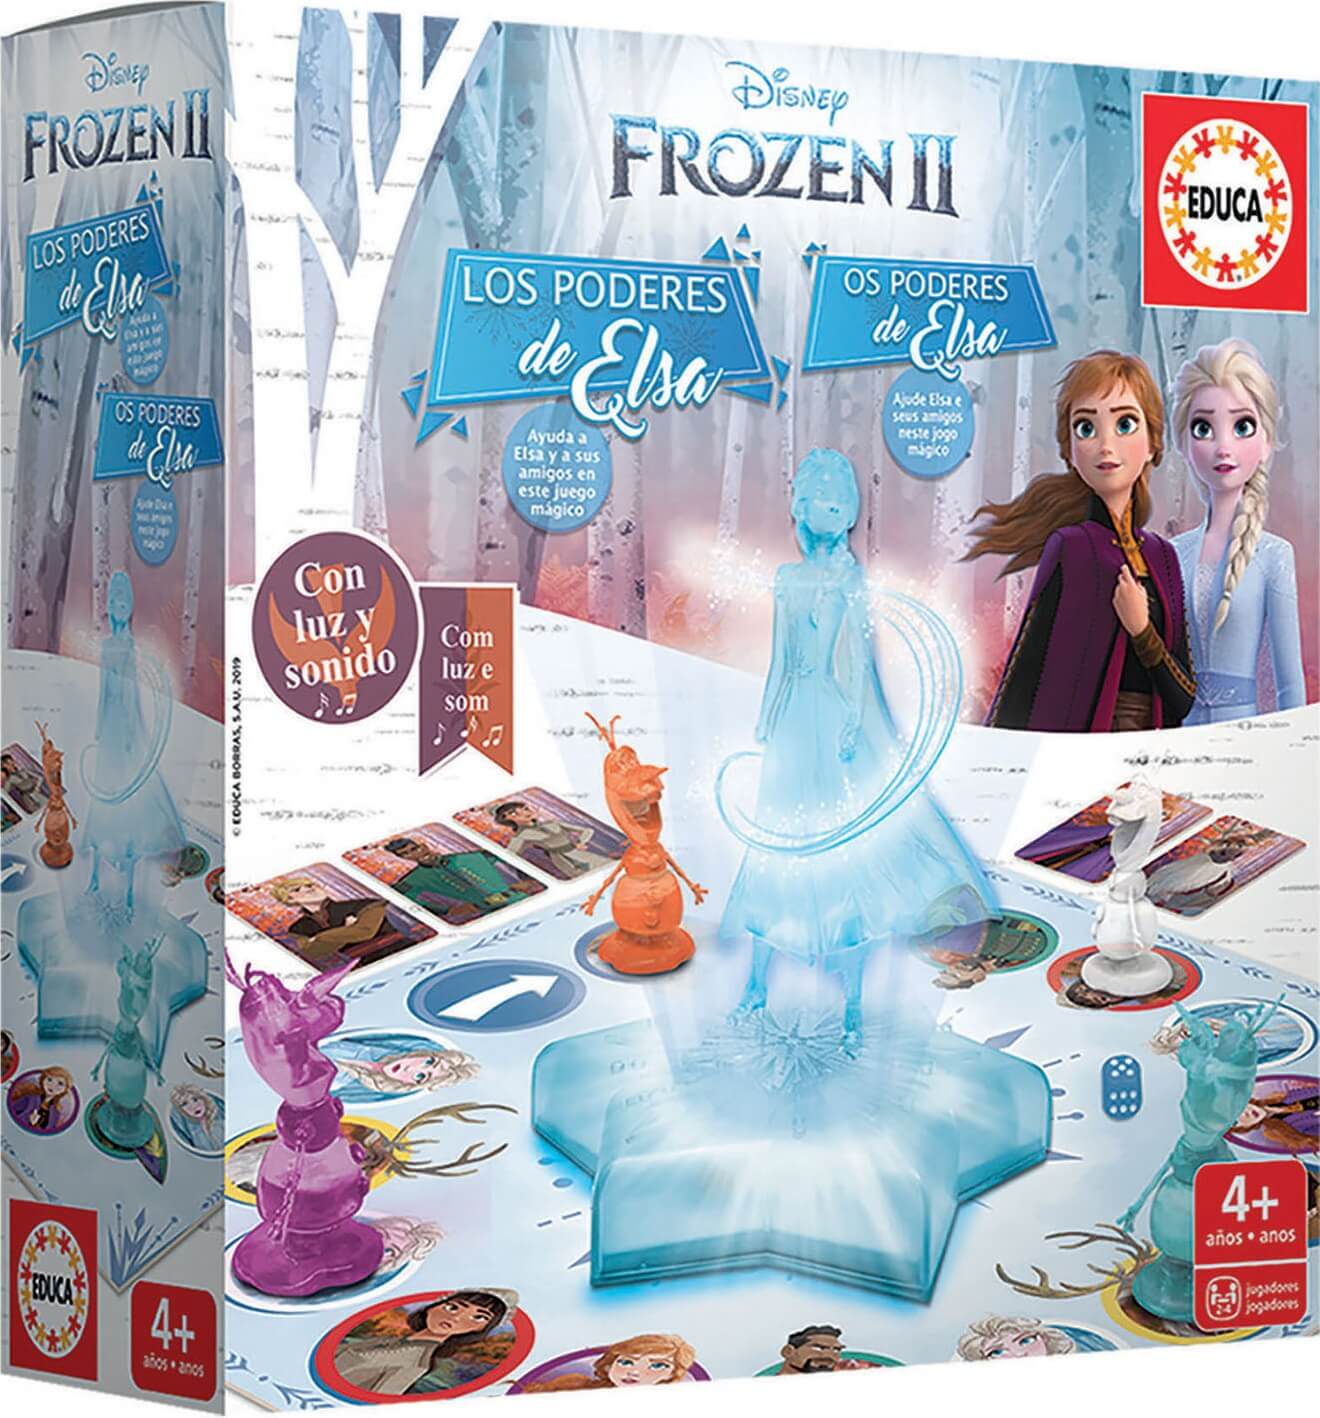 Frozen 2: Los poderes de Elsa ( Educa 18239 ) imagen c